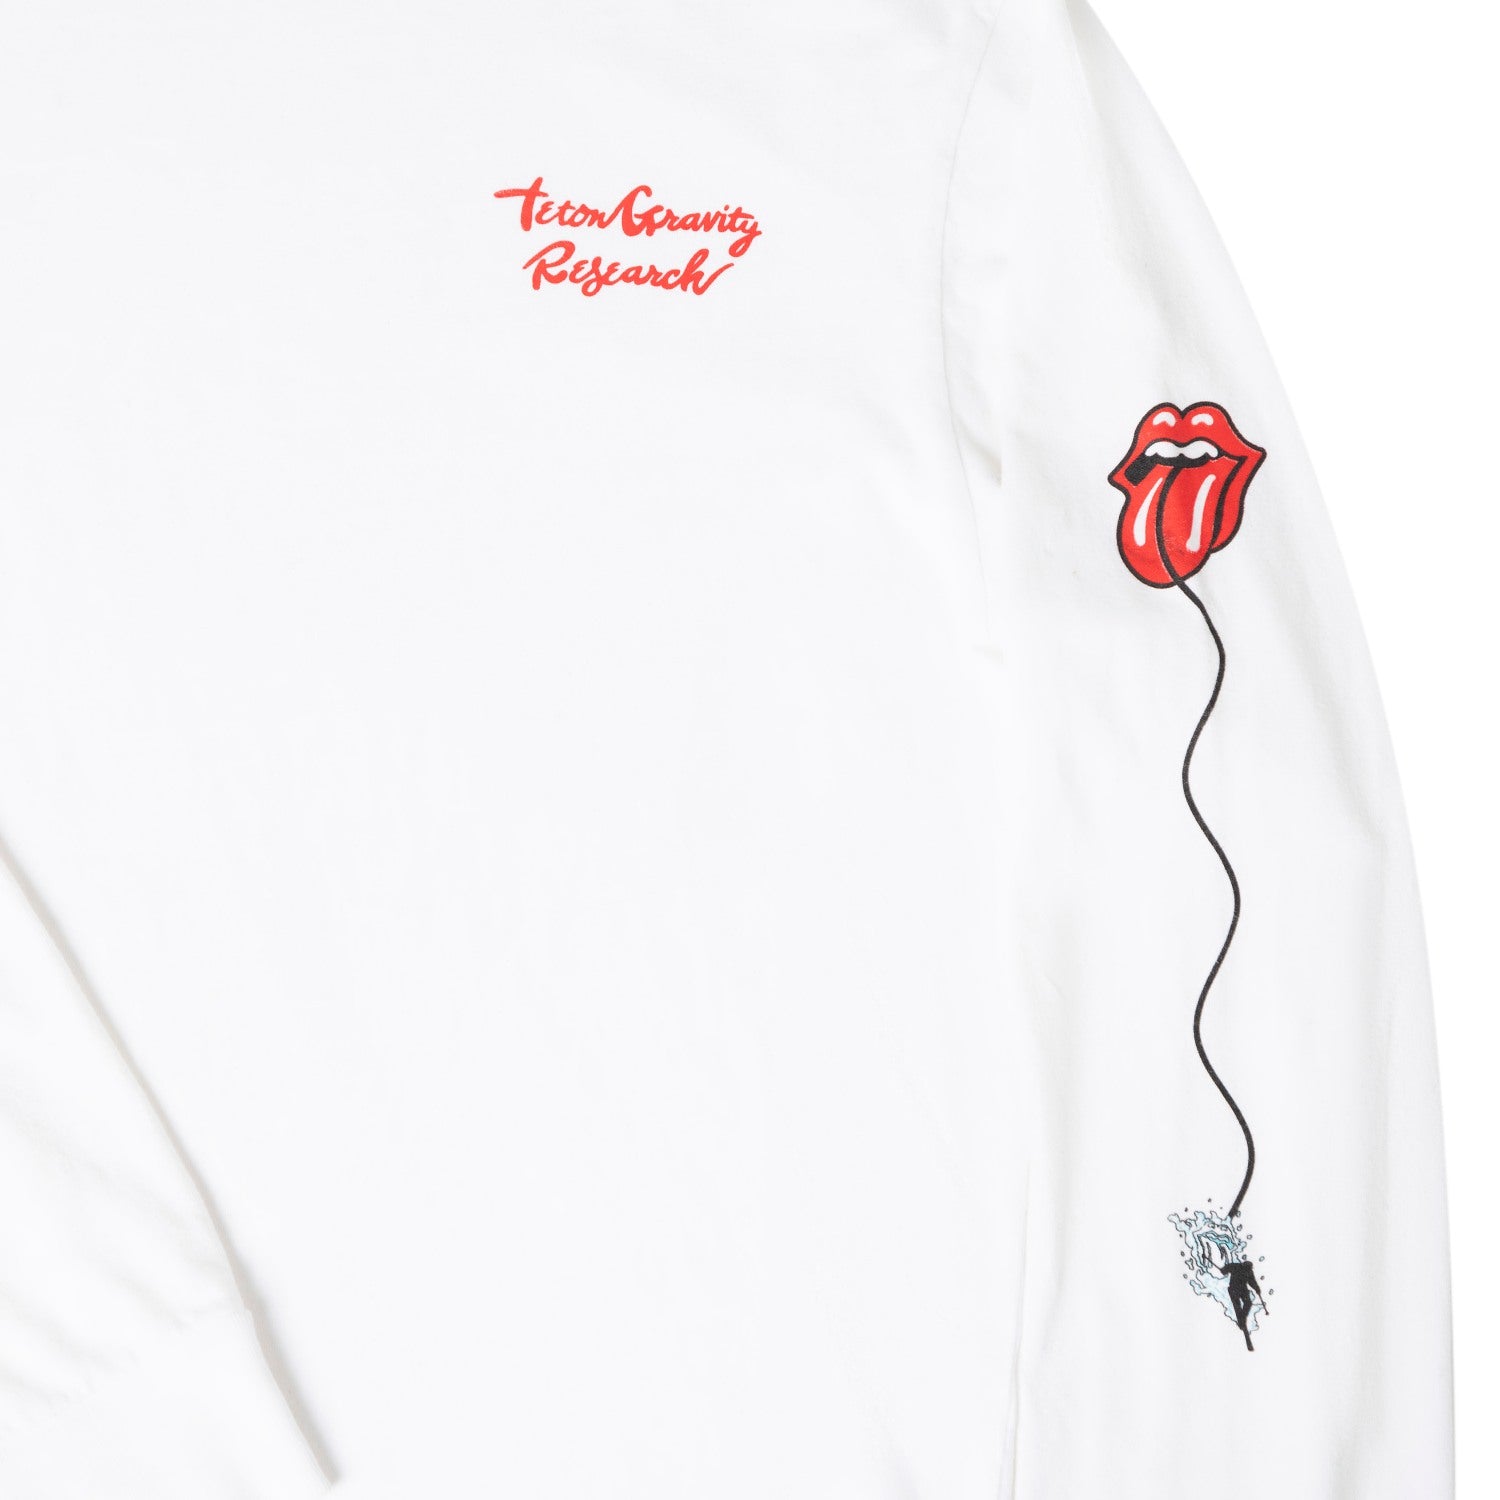 Rolling Stones x TGR "Lick Tracks" Long Sleeve Tee - Teton Gravity Research